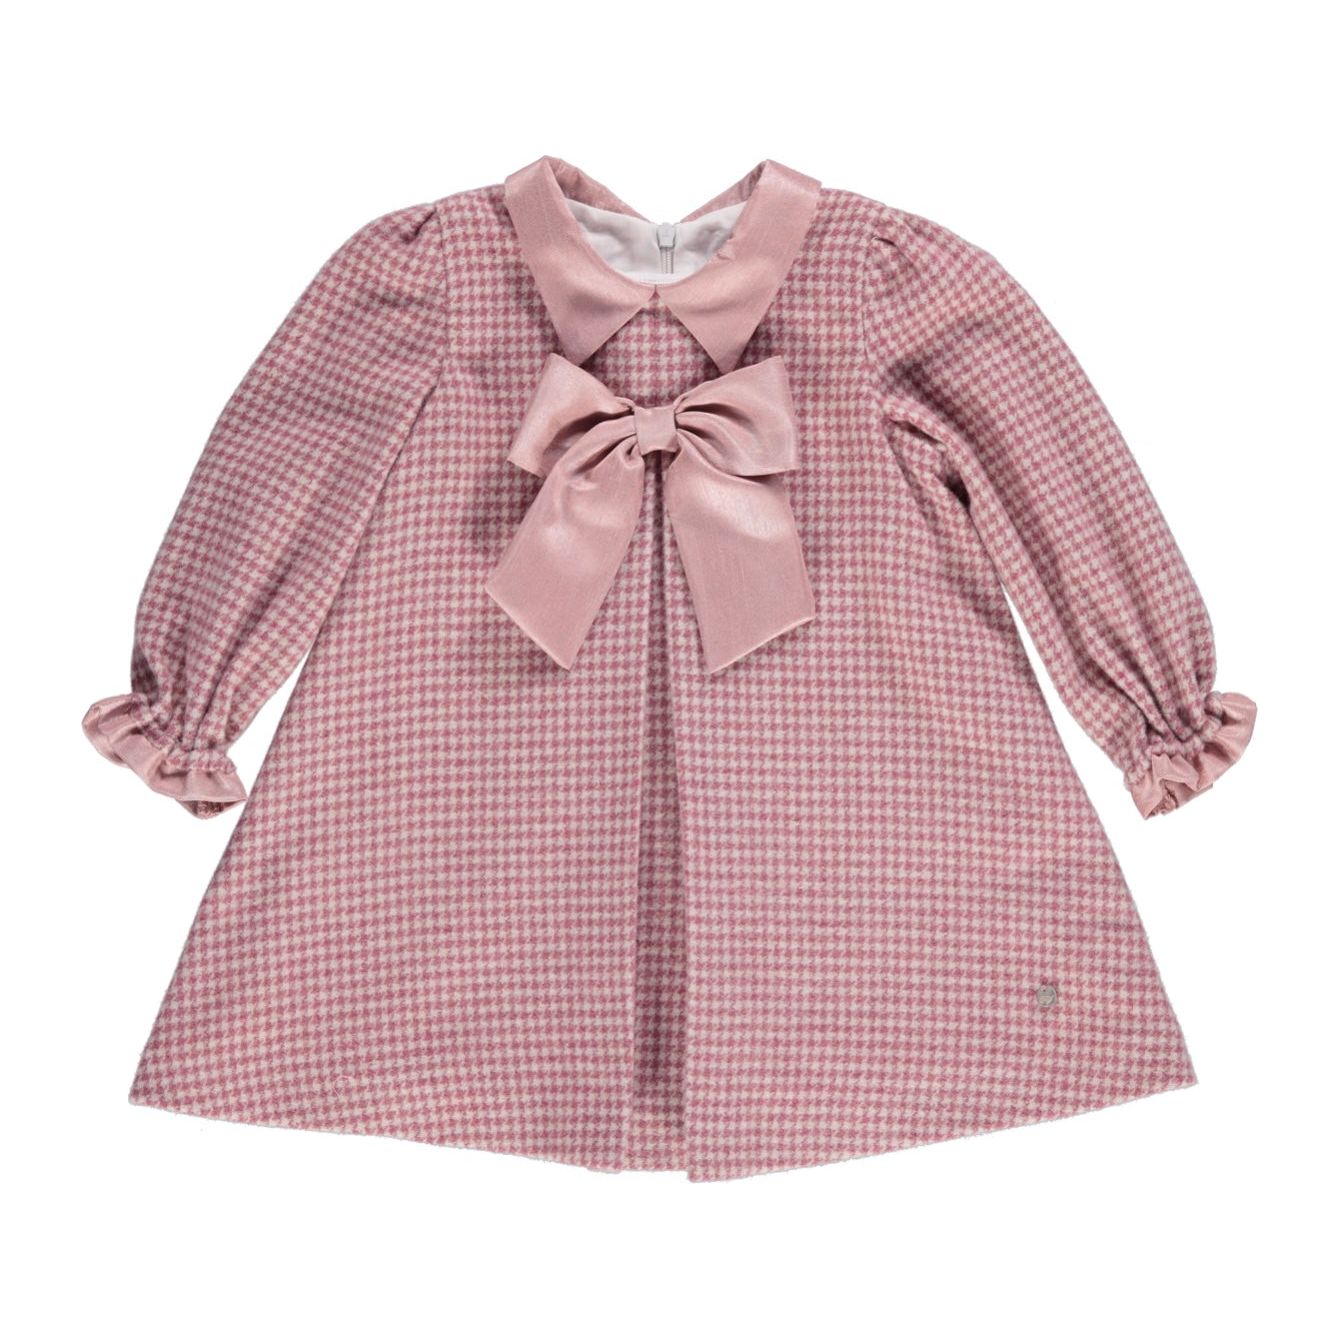 Pink dogtooth dress for little girls